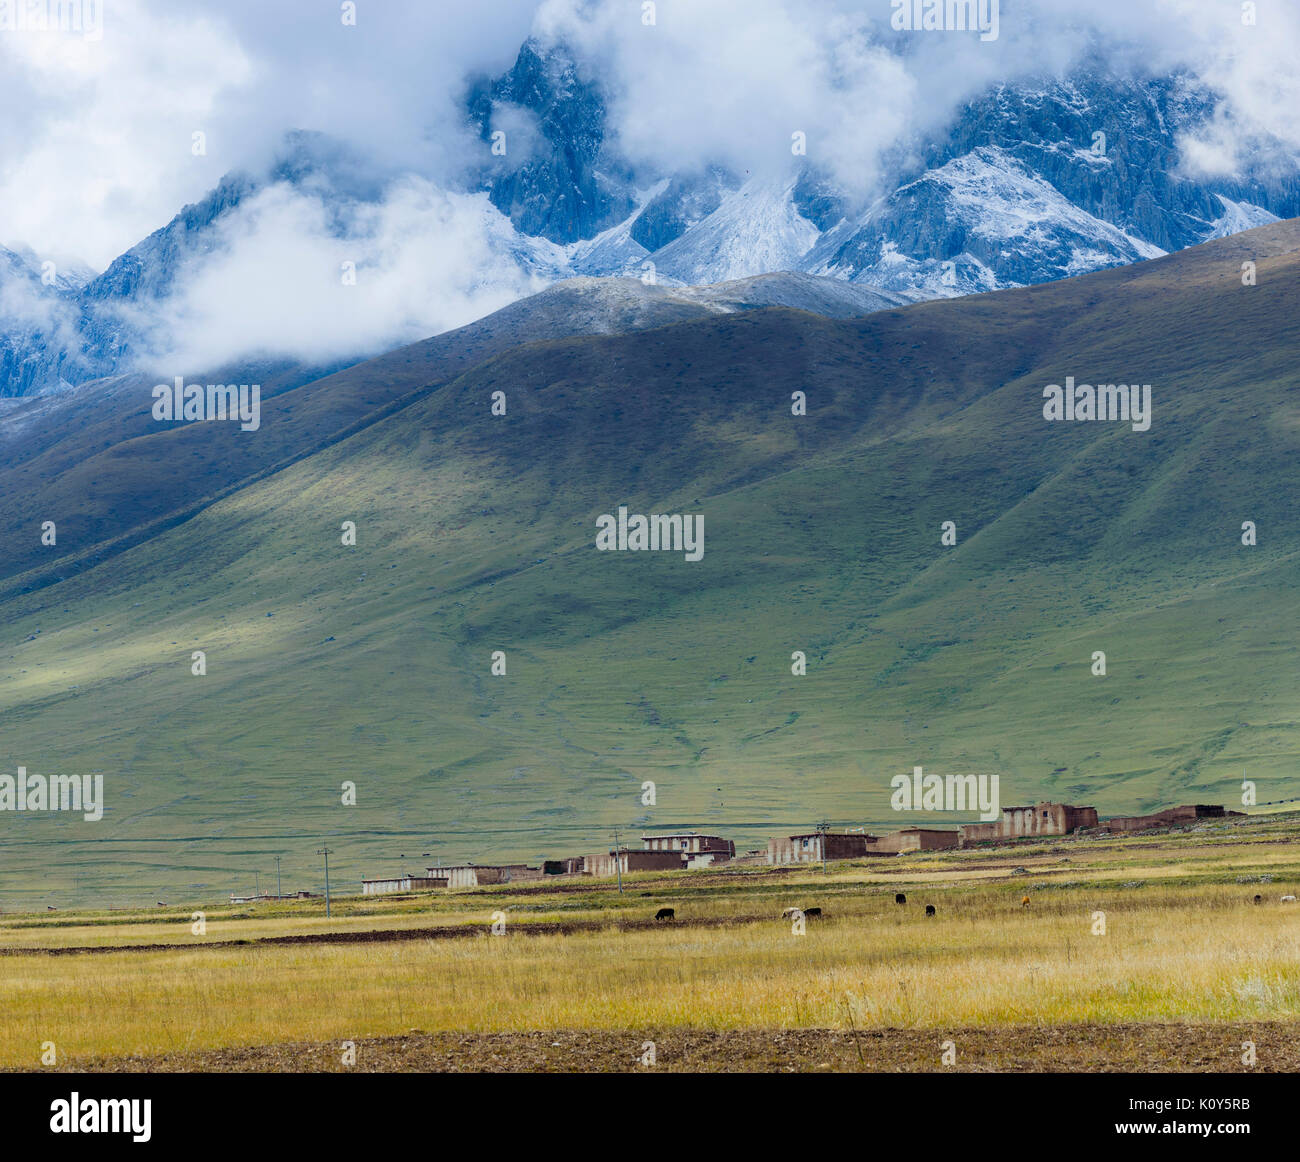 Village with farmland on the Tibetan Plateau Stock Photo